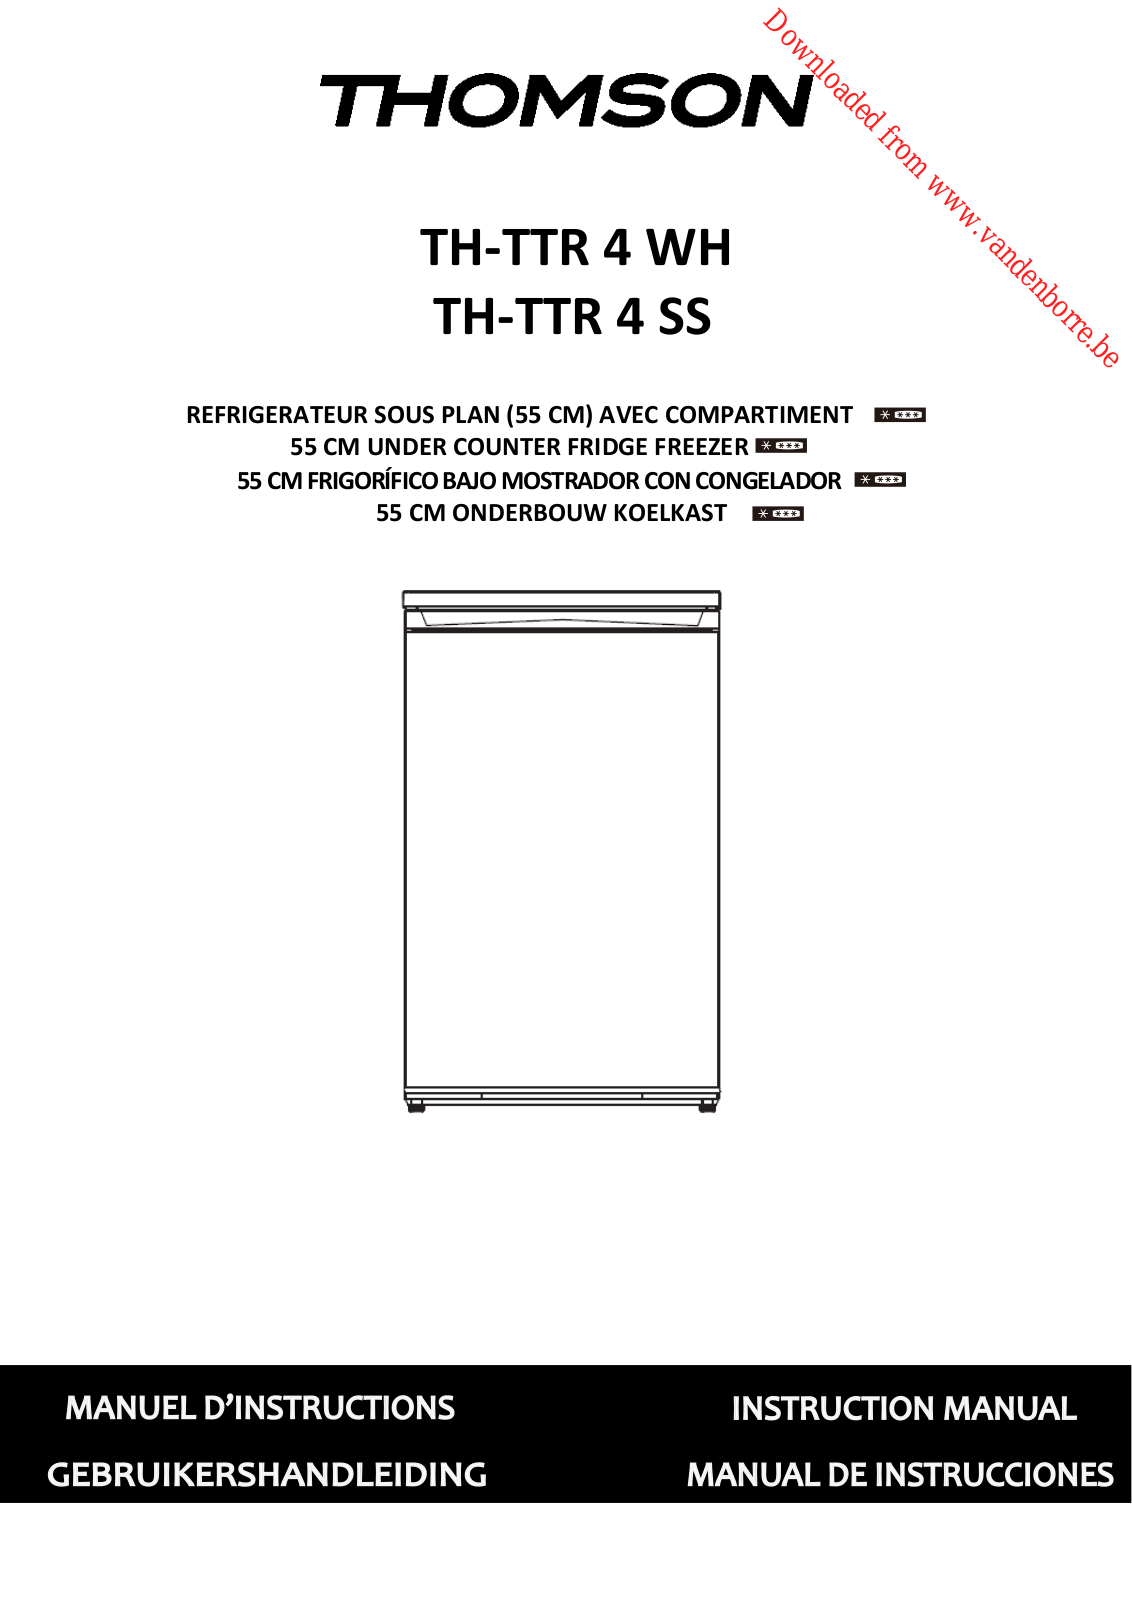 THOMSON TH-TTR 4 WH User Manual